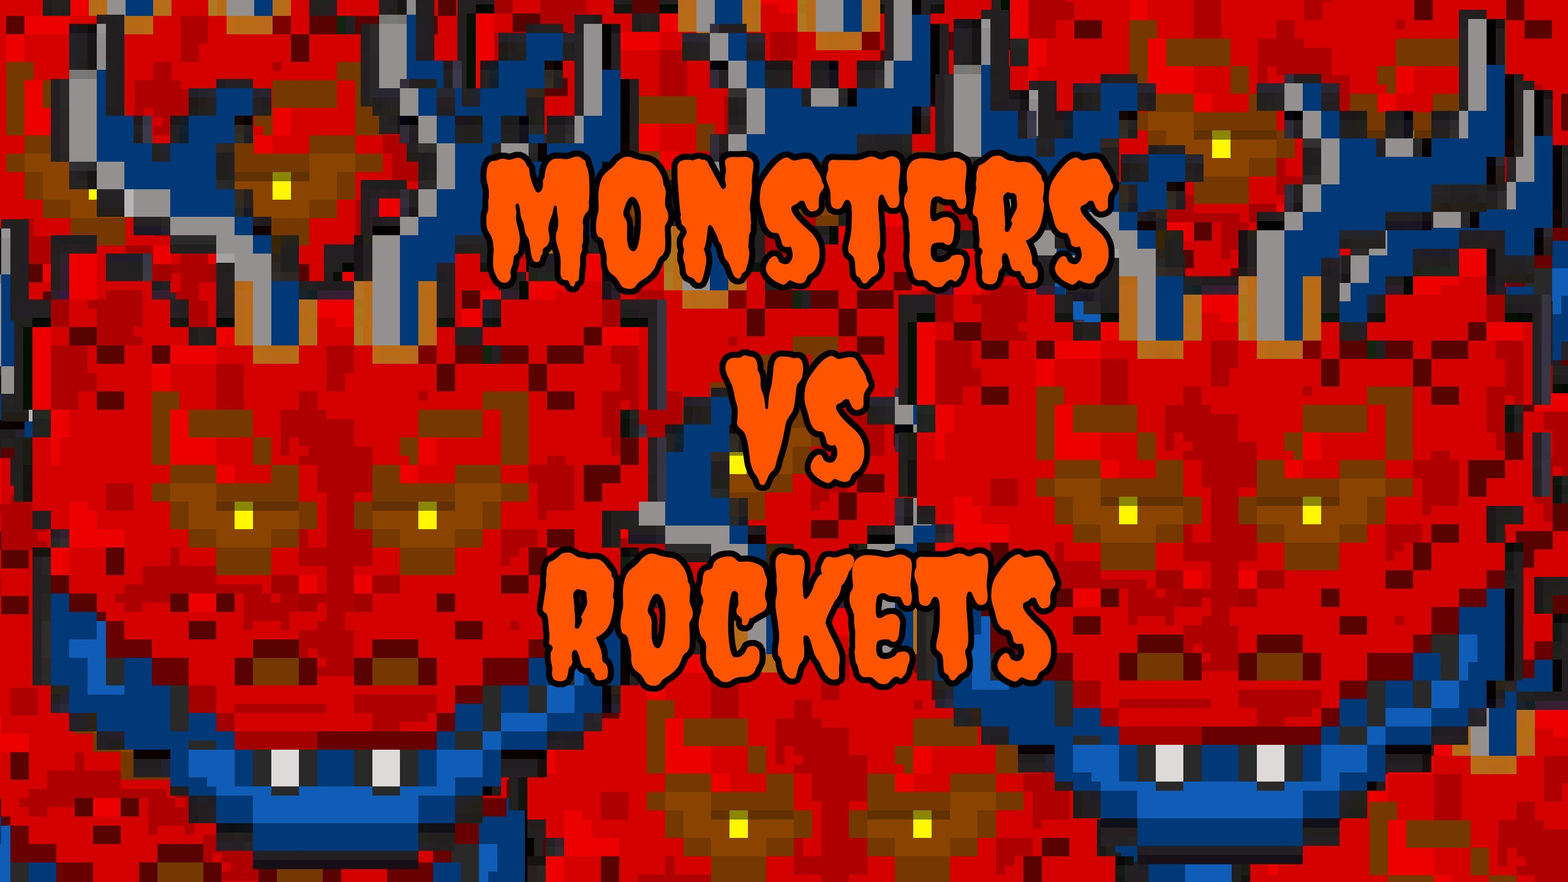 MONSTERS VS ROCKETS